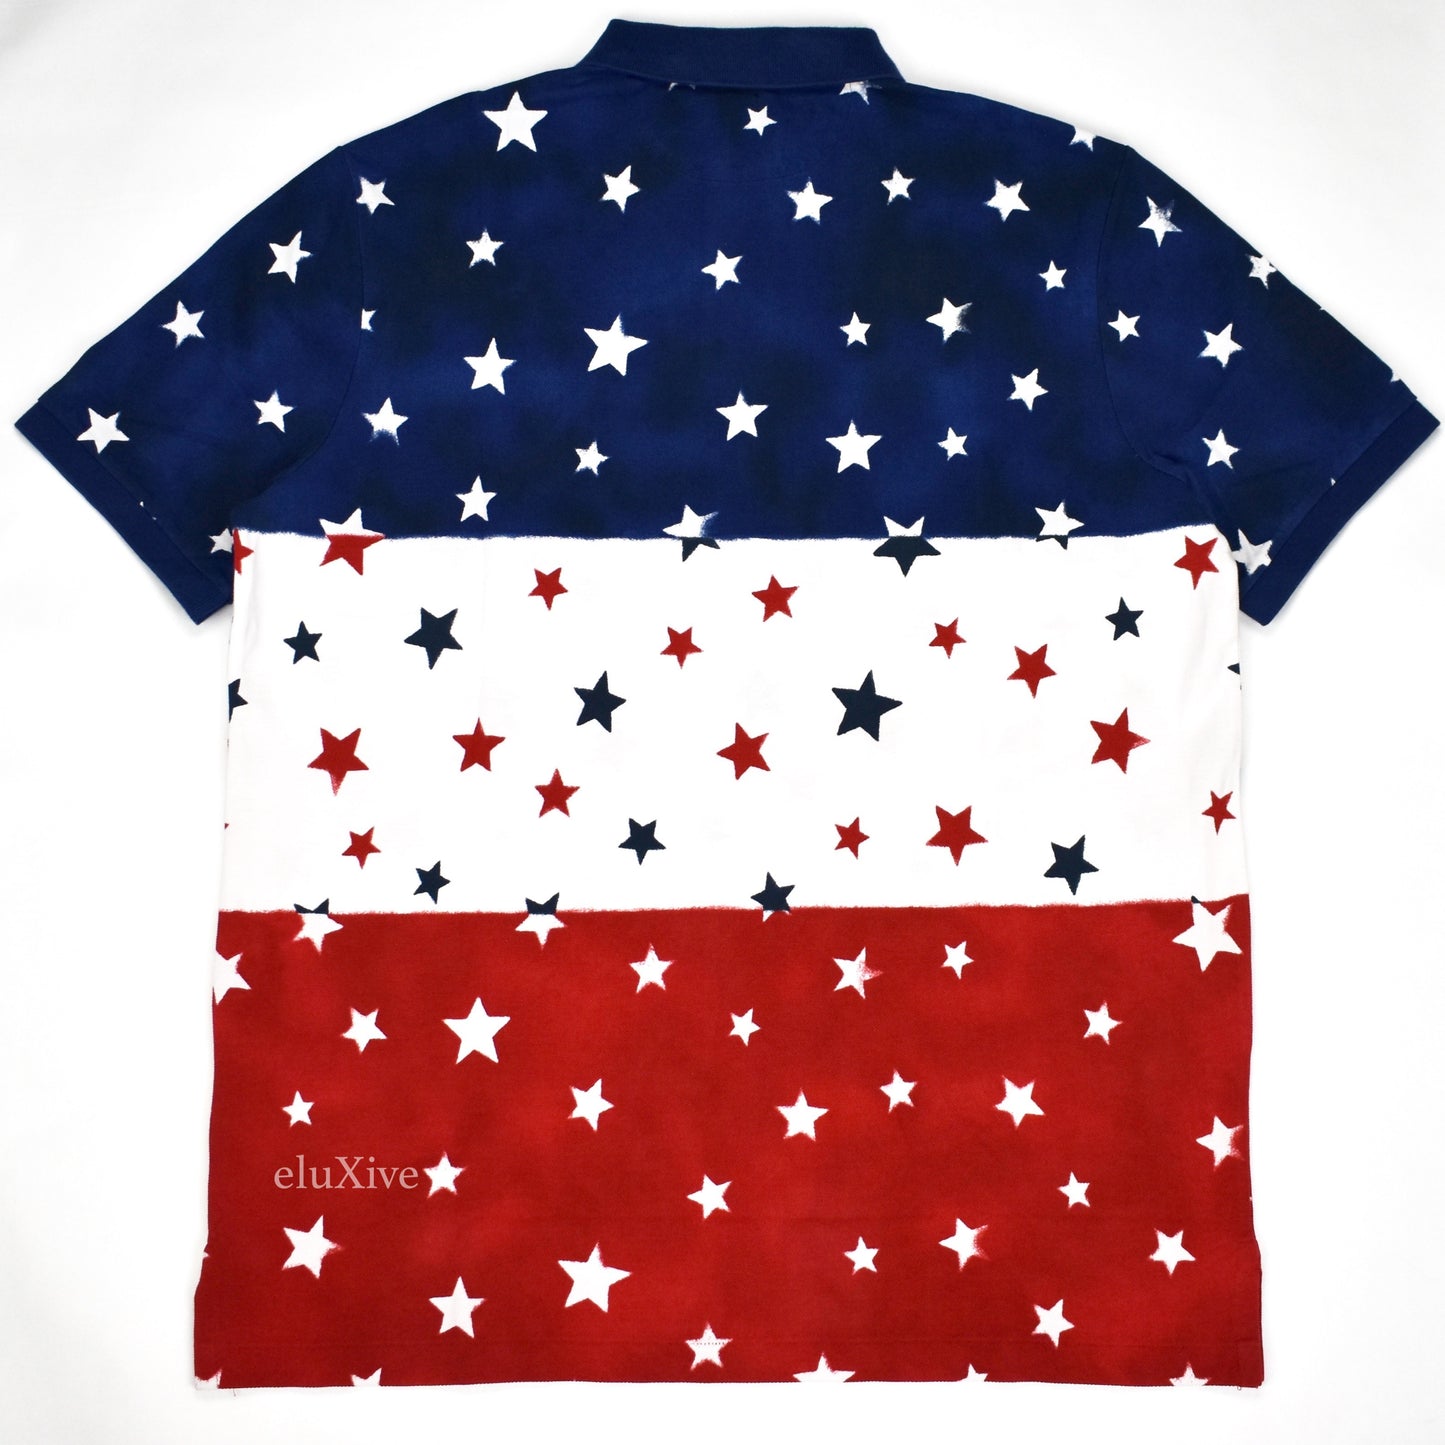 Polo Ralph Lauren - Distressed Stars Print Polo Shirt